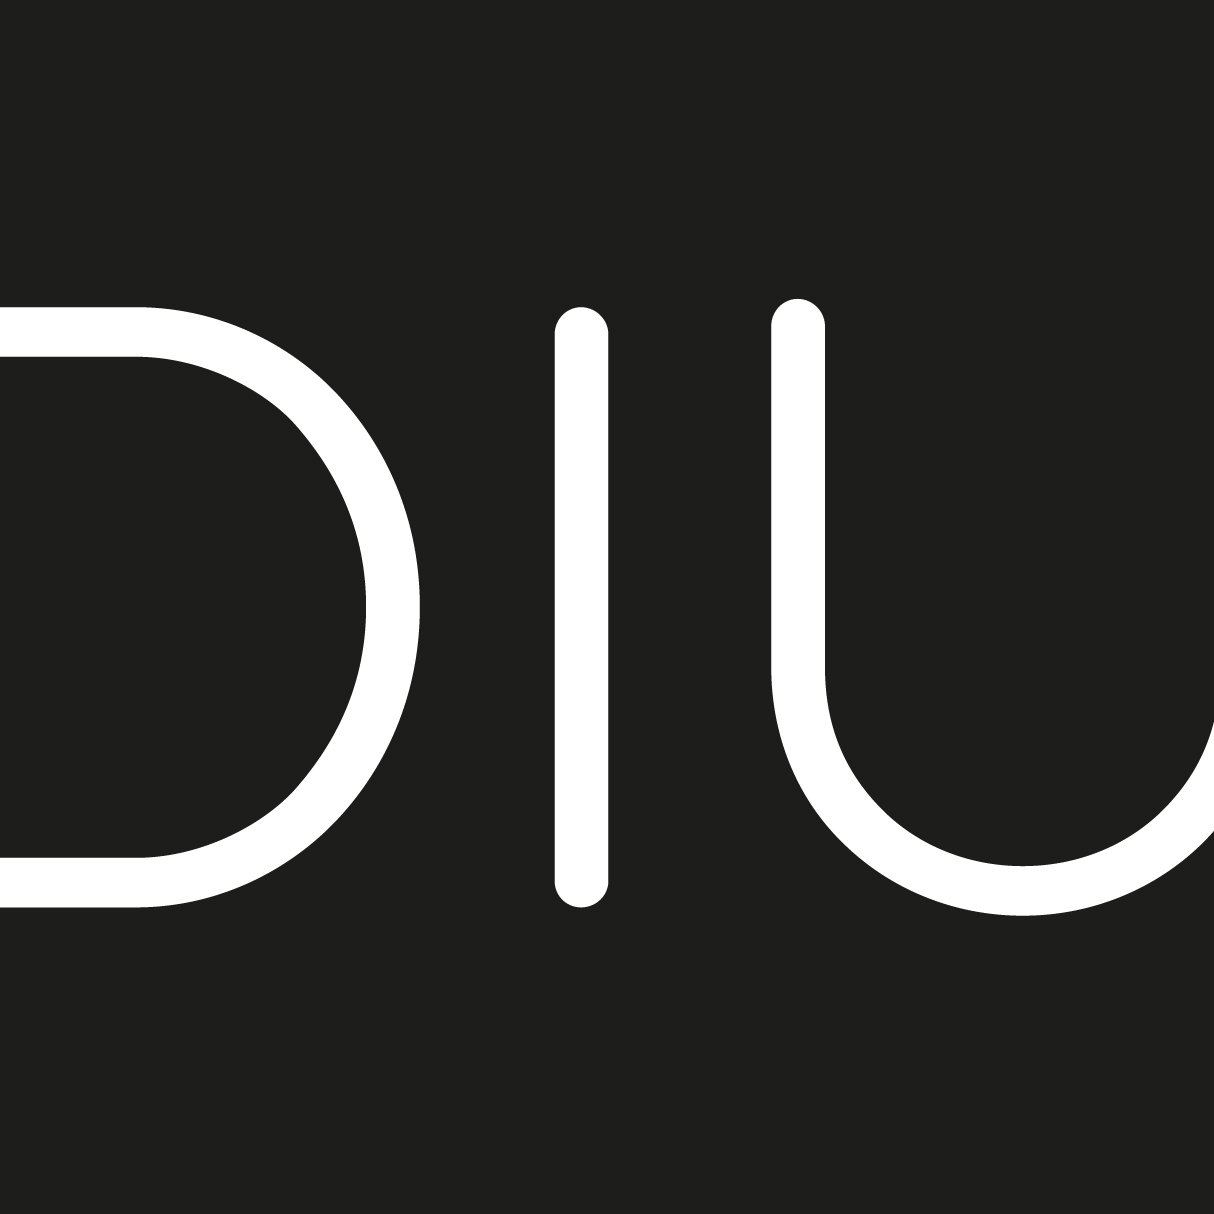 DIU Logo